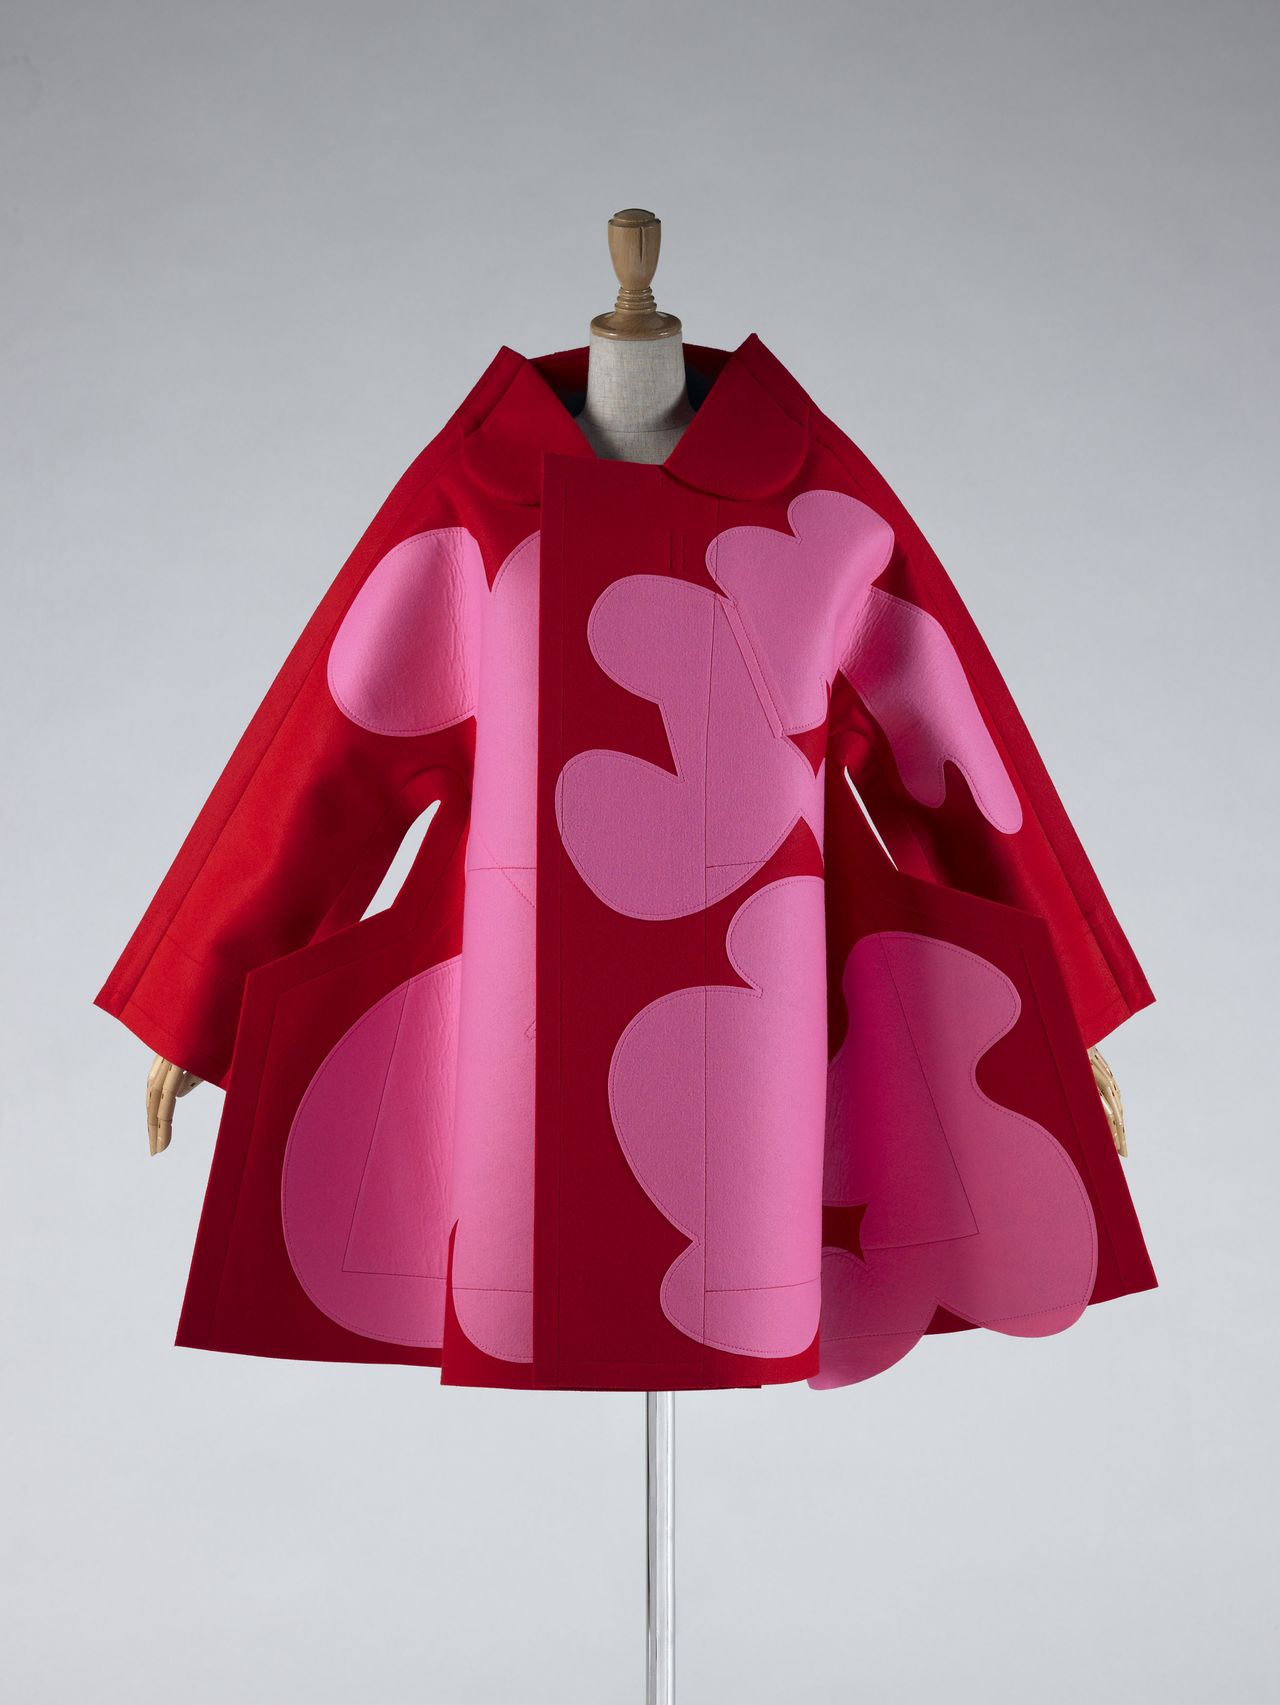 Coat by Comme des Garçons (Rei Kawakubo), autumn/winter 2012. Photo by Hayashi Masayuki. (© Kyoto Costume Institute)